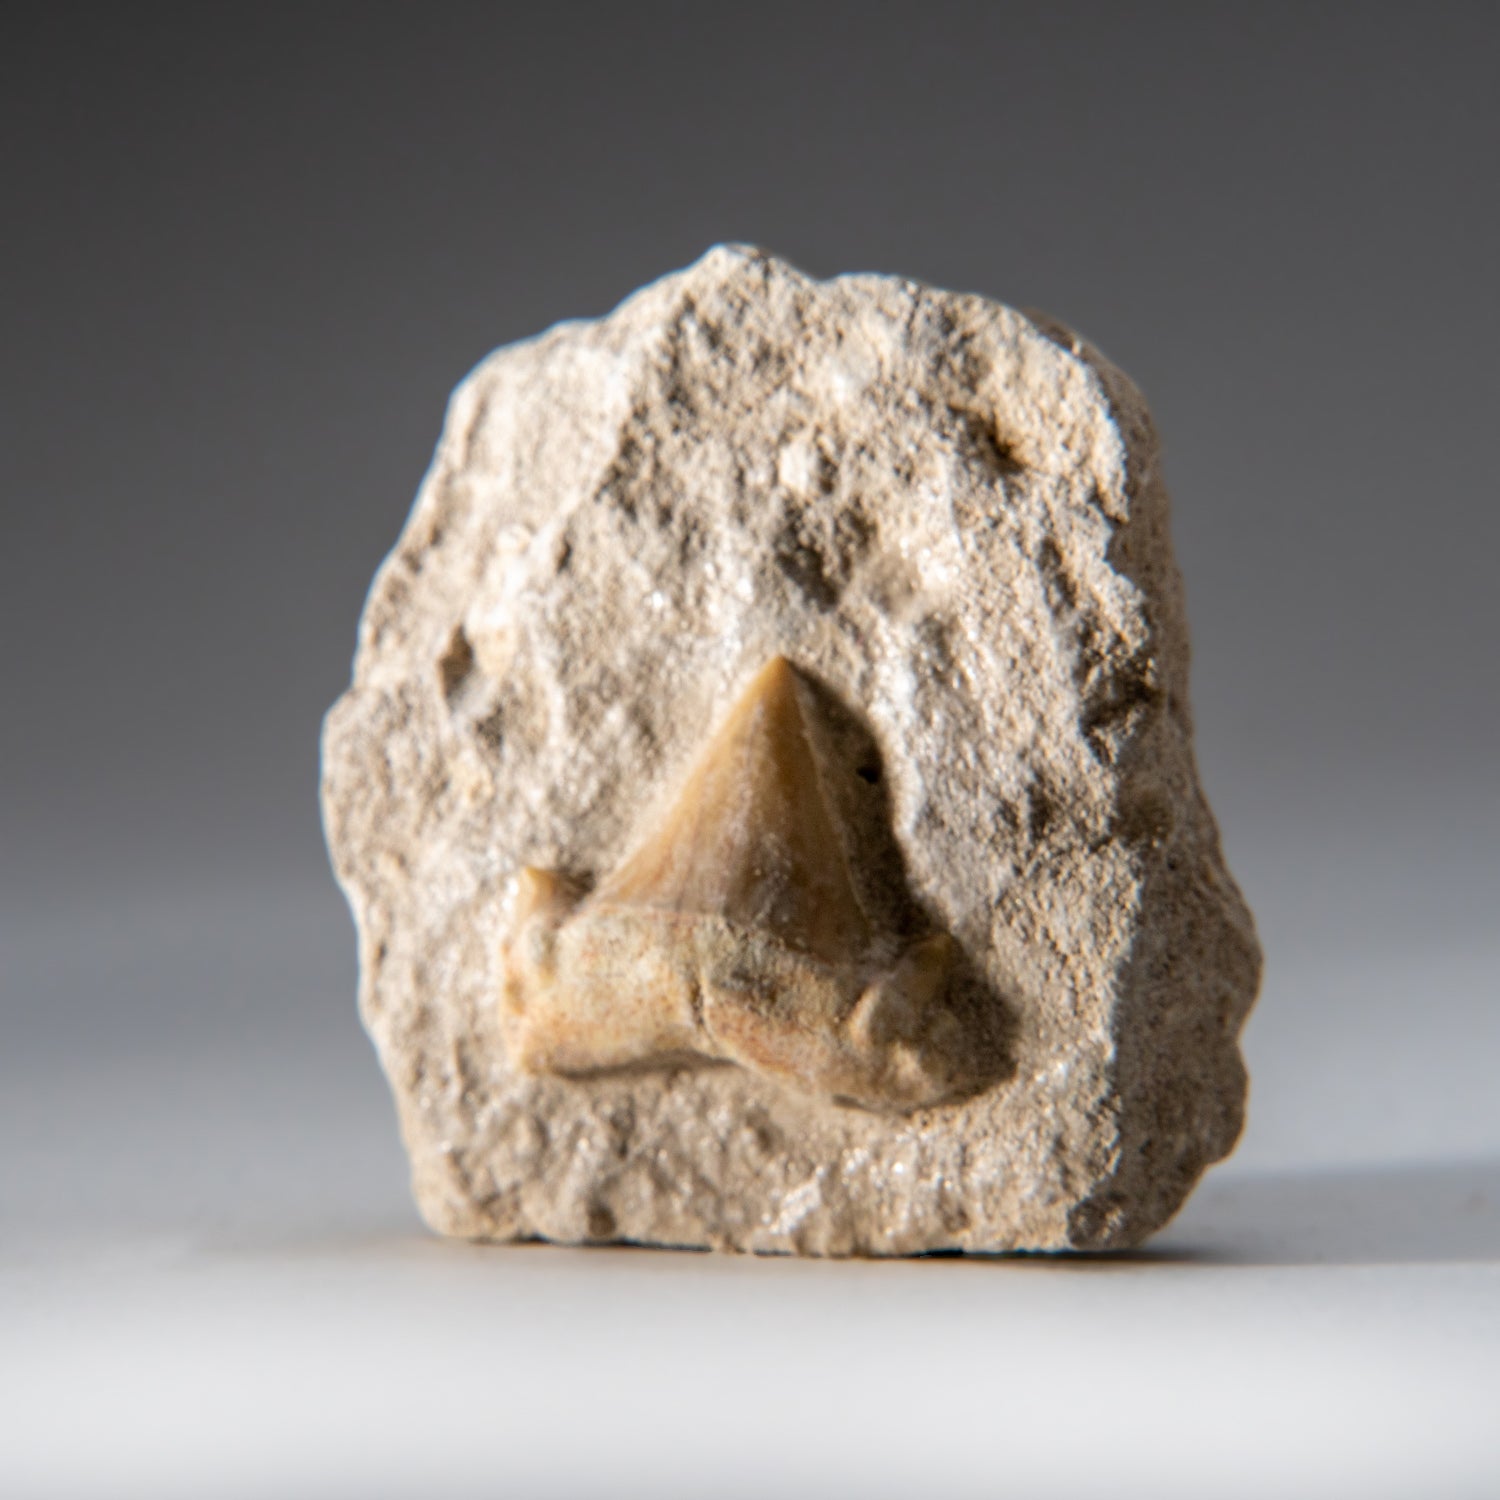 Genuine Small Pre-Historic (Otodus obliquus) Shark Tooth in Matrix